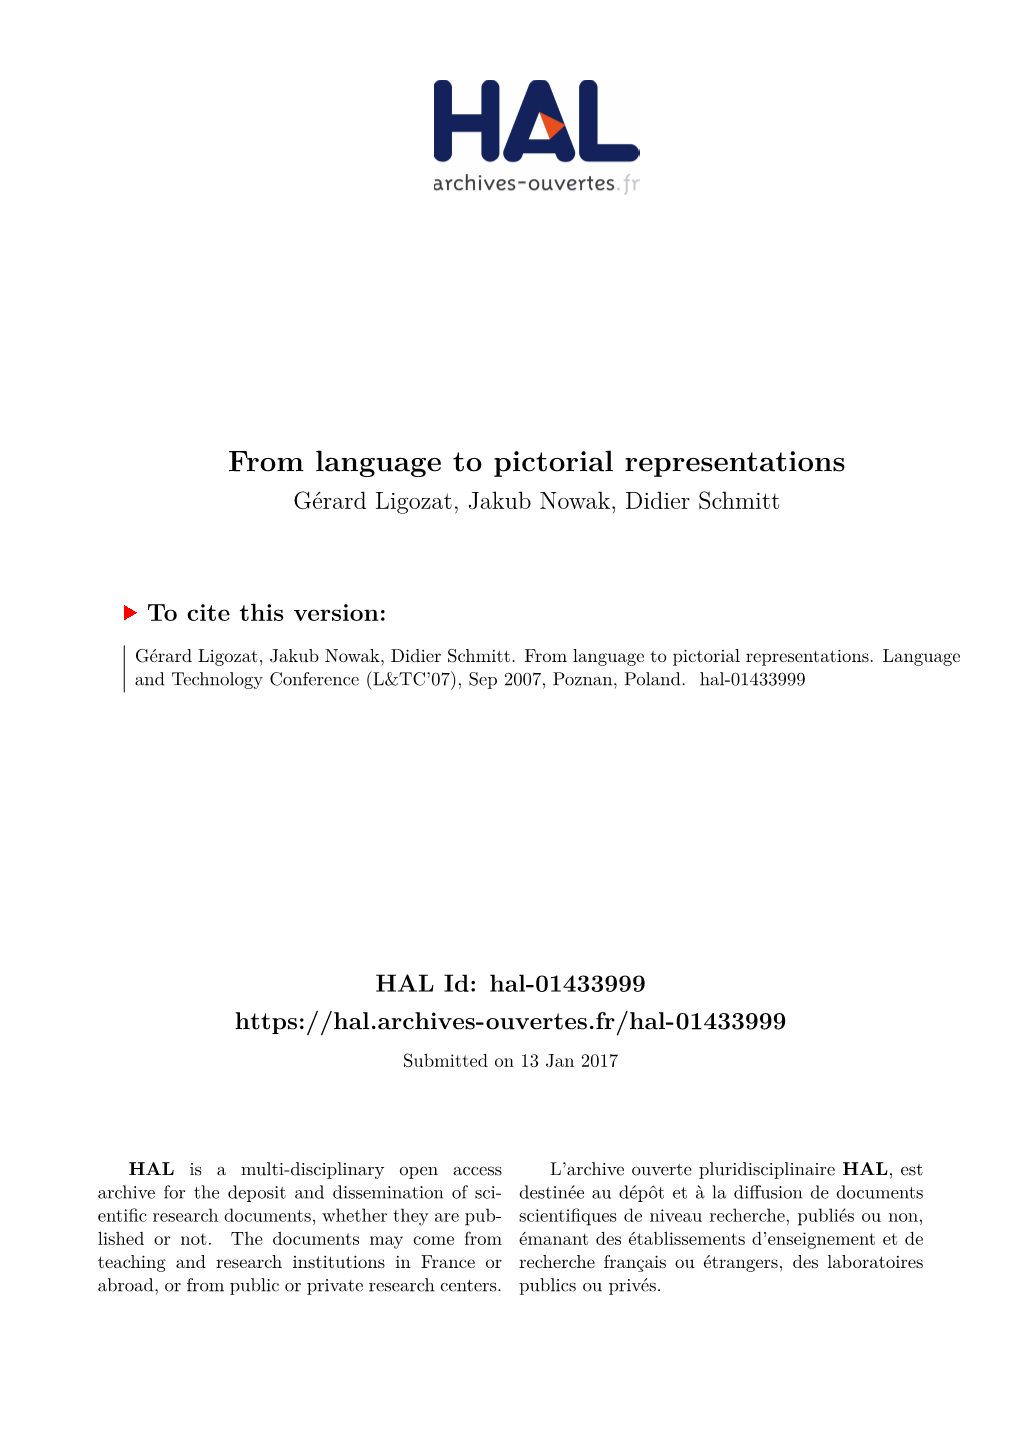 From Language to Pictorial Representations Gérard Ligozat, Jakub Nowak, Didier Schmitt